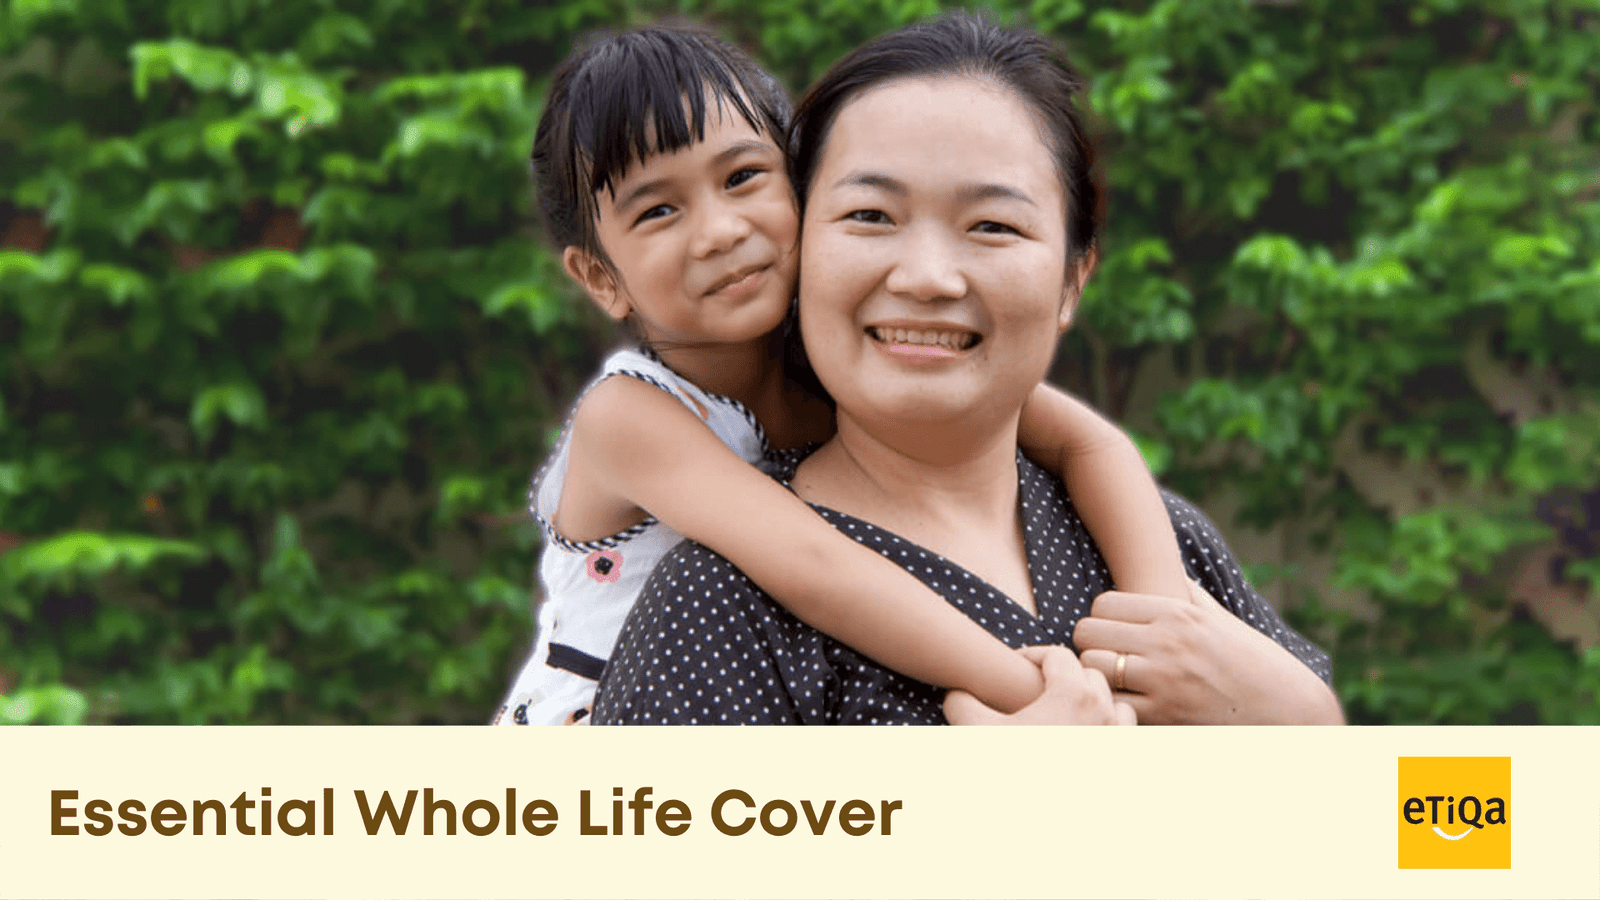 Etiqa Essential Whole Life Cover